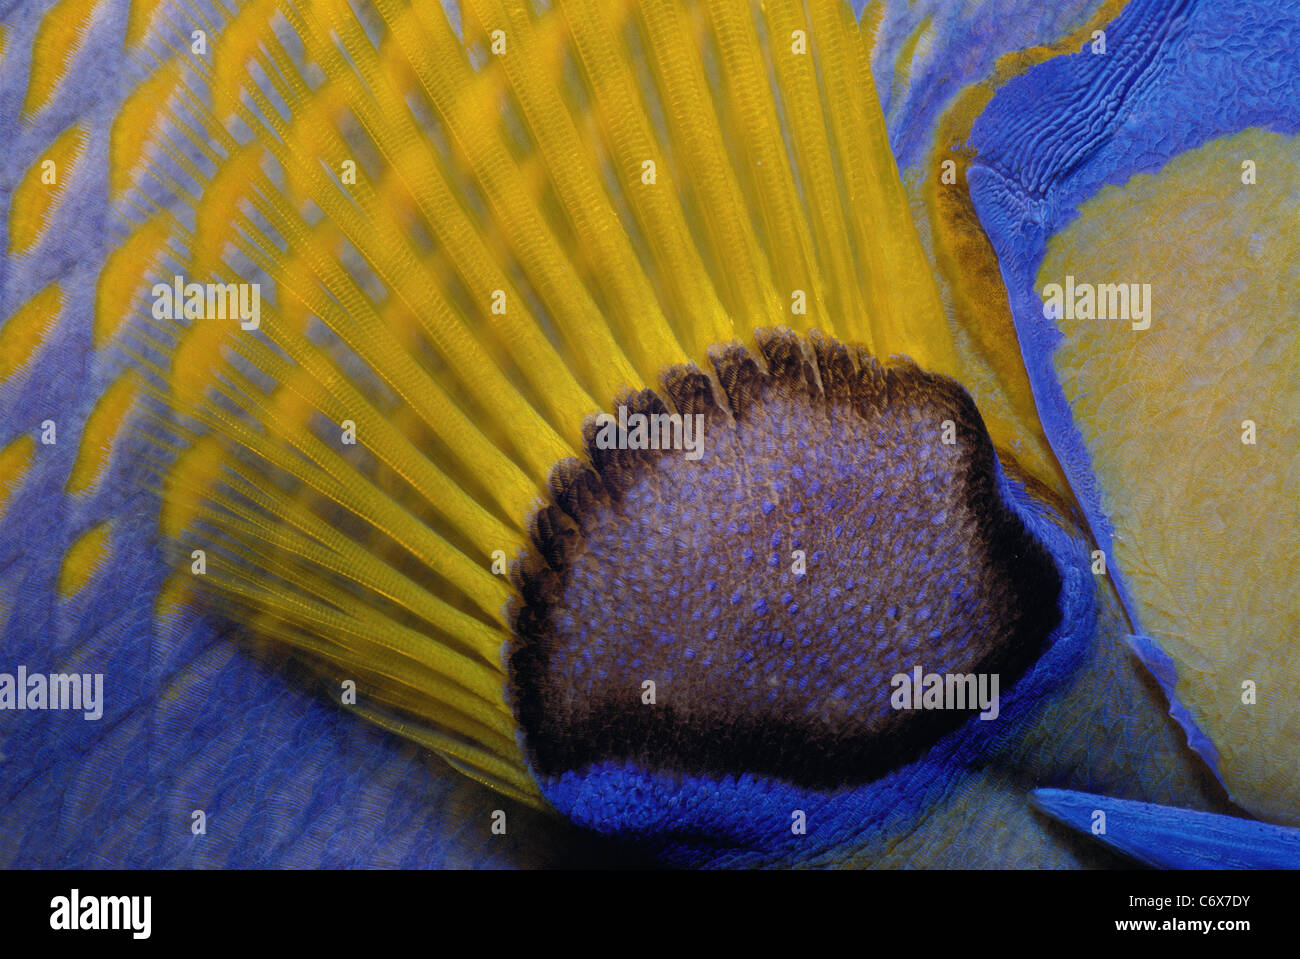 Pectoral fin of Queen Angelfish (Holacanthus ciliaris), Bahamas - Caribbean Sea Stock Photo